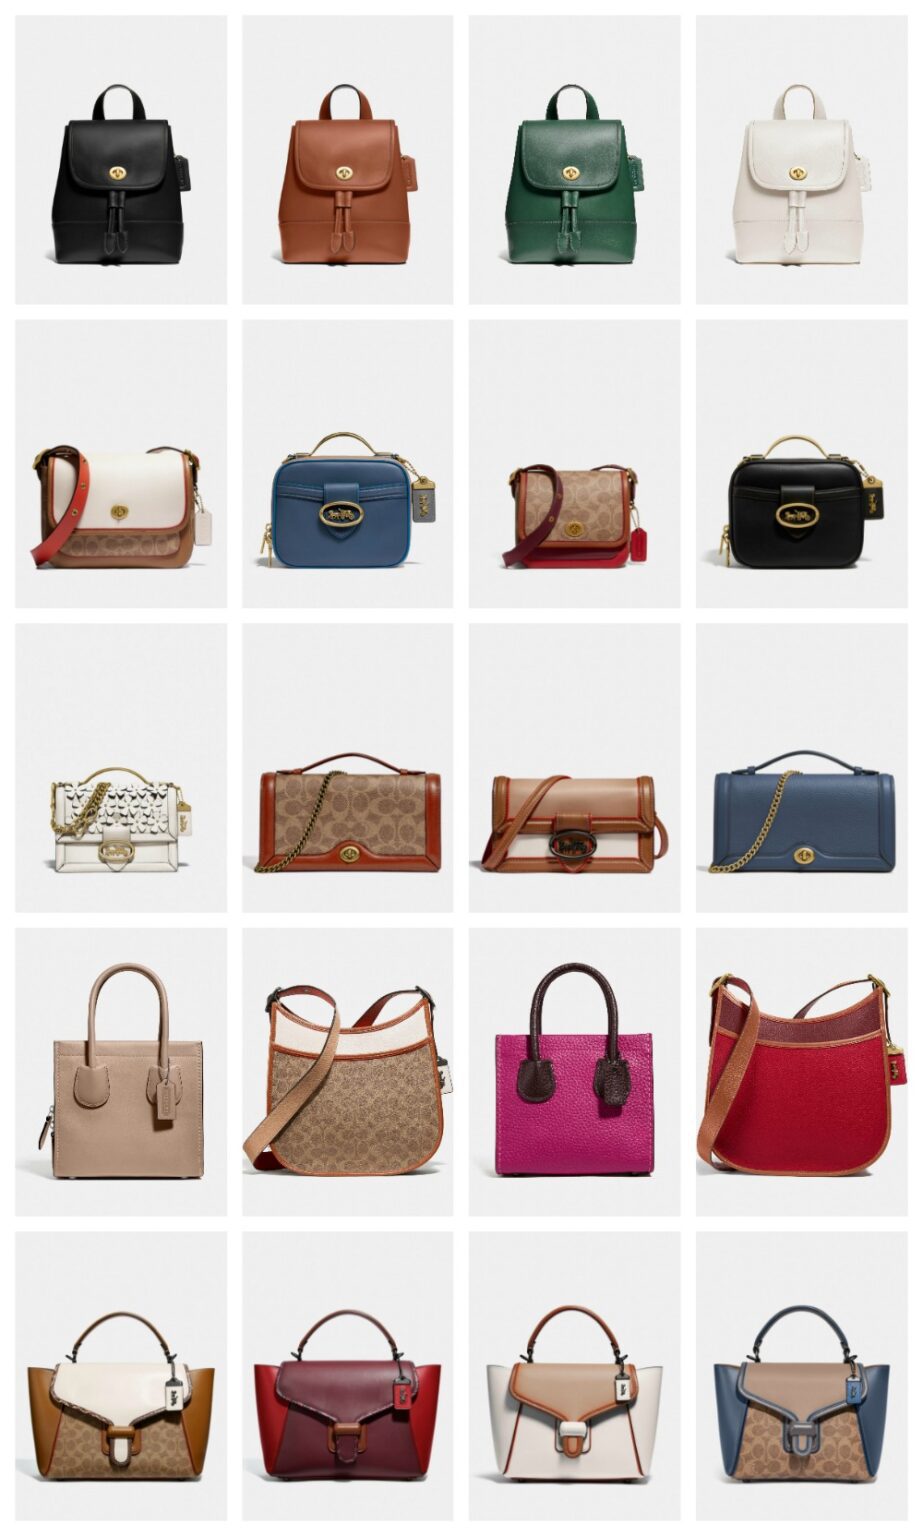 COACH Fall 2020 Handbags & Backpacks I DreaminLace.com